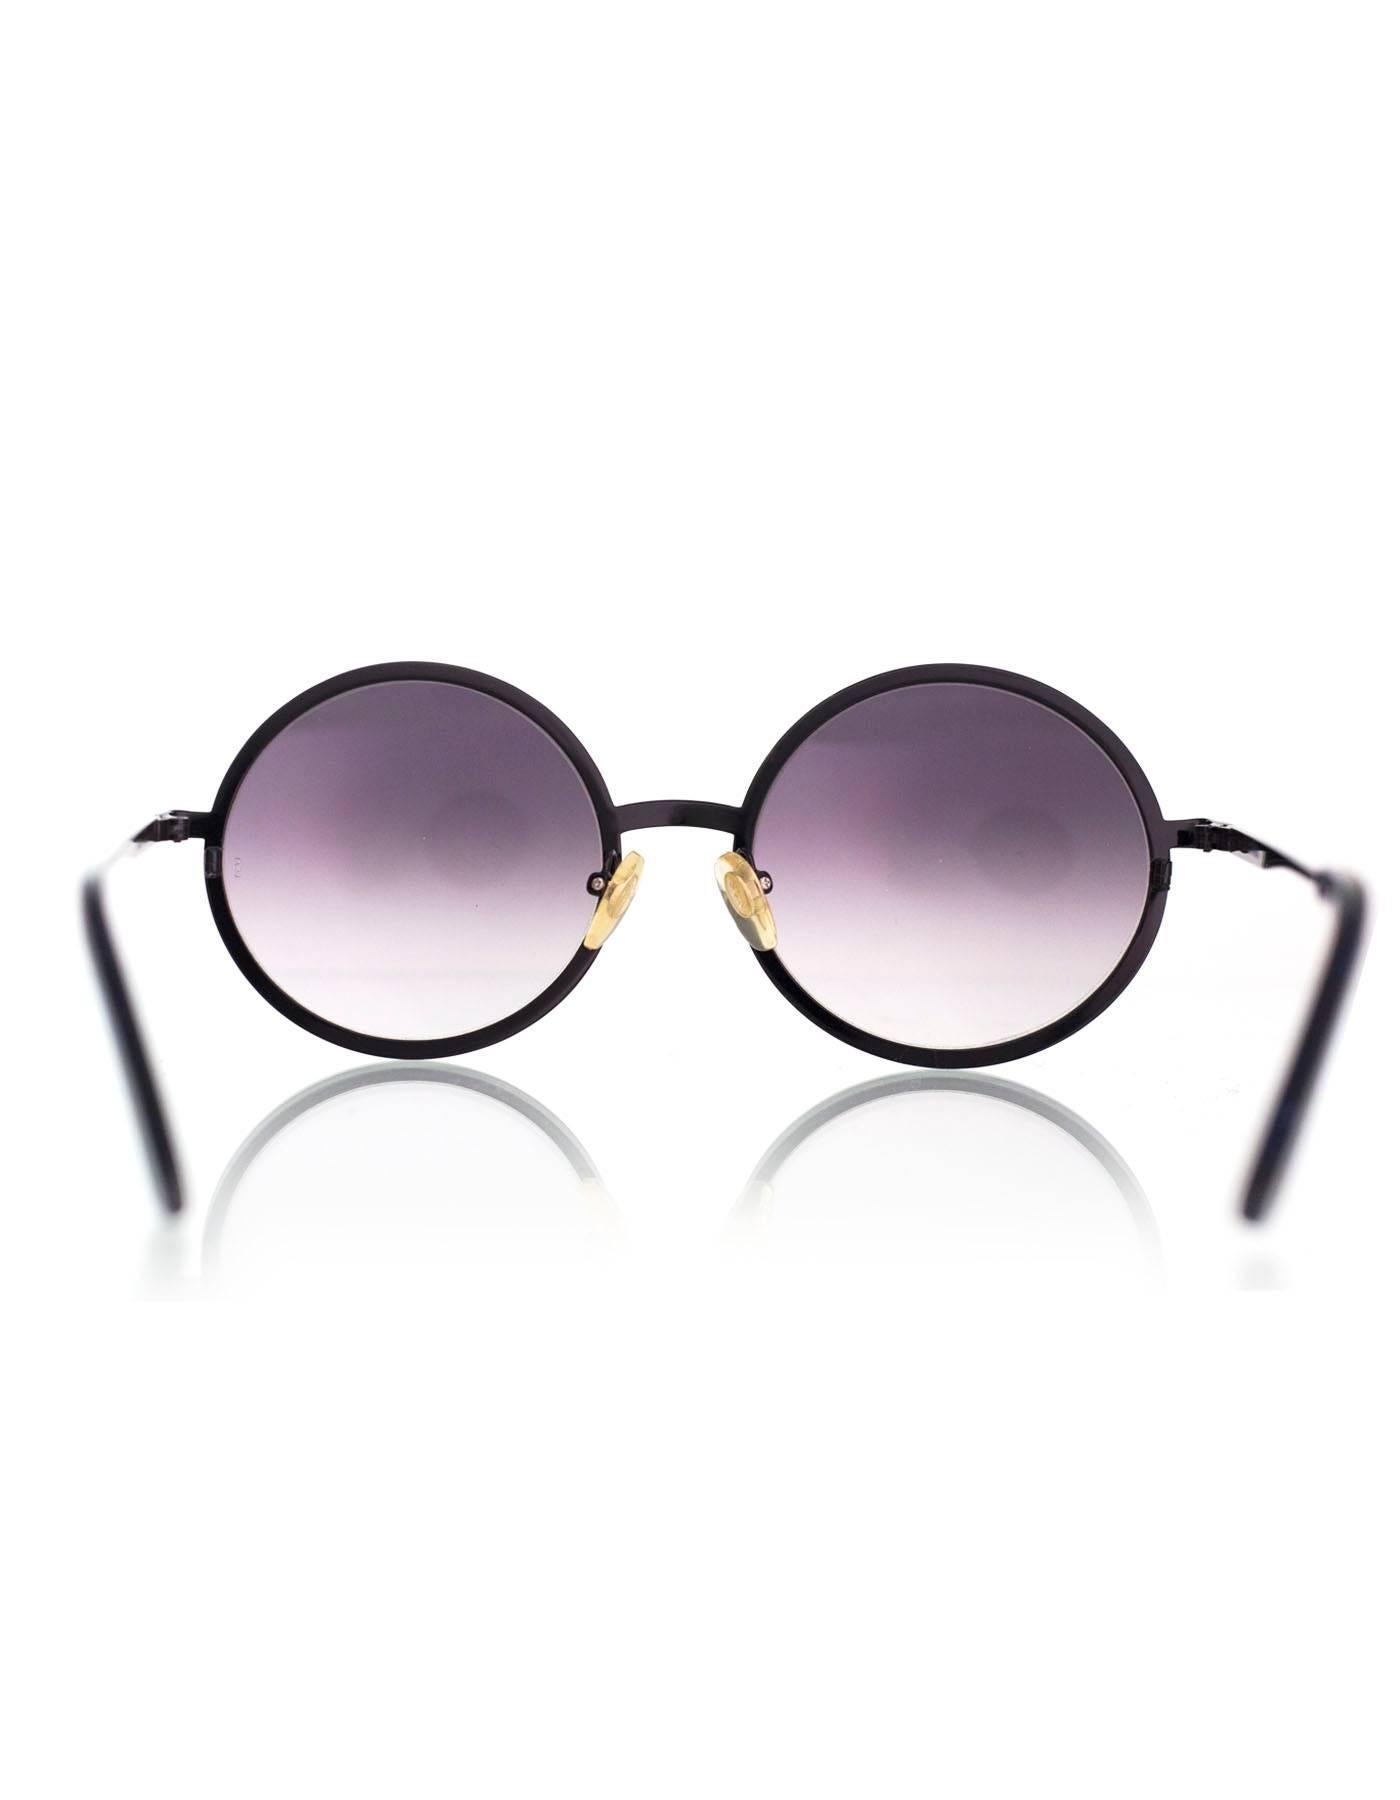 Women's or Men's Sunday Somewhere NEW Black Round Charlie Sunglasses rt. $290